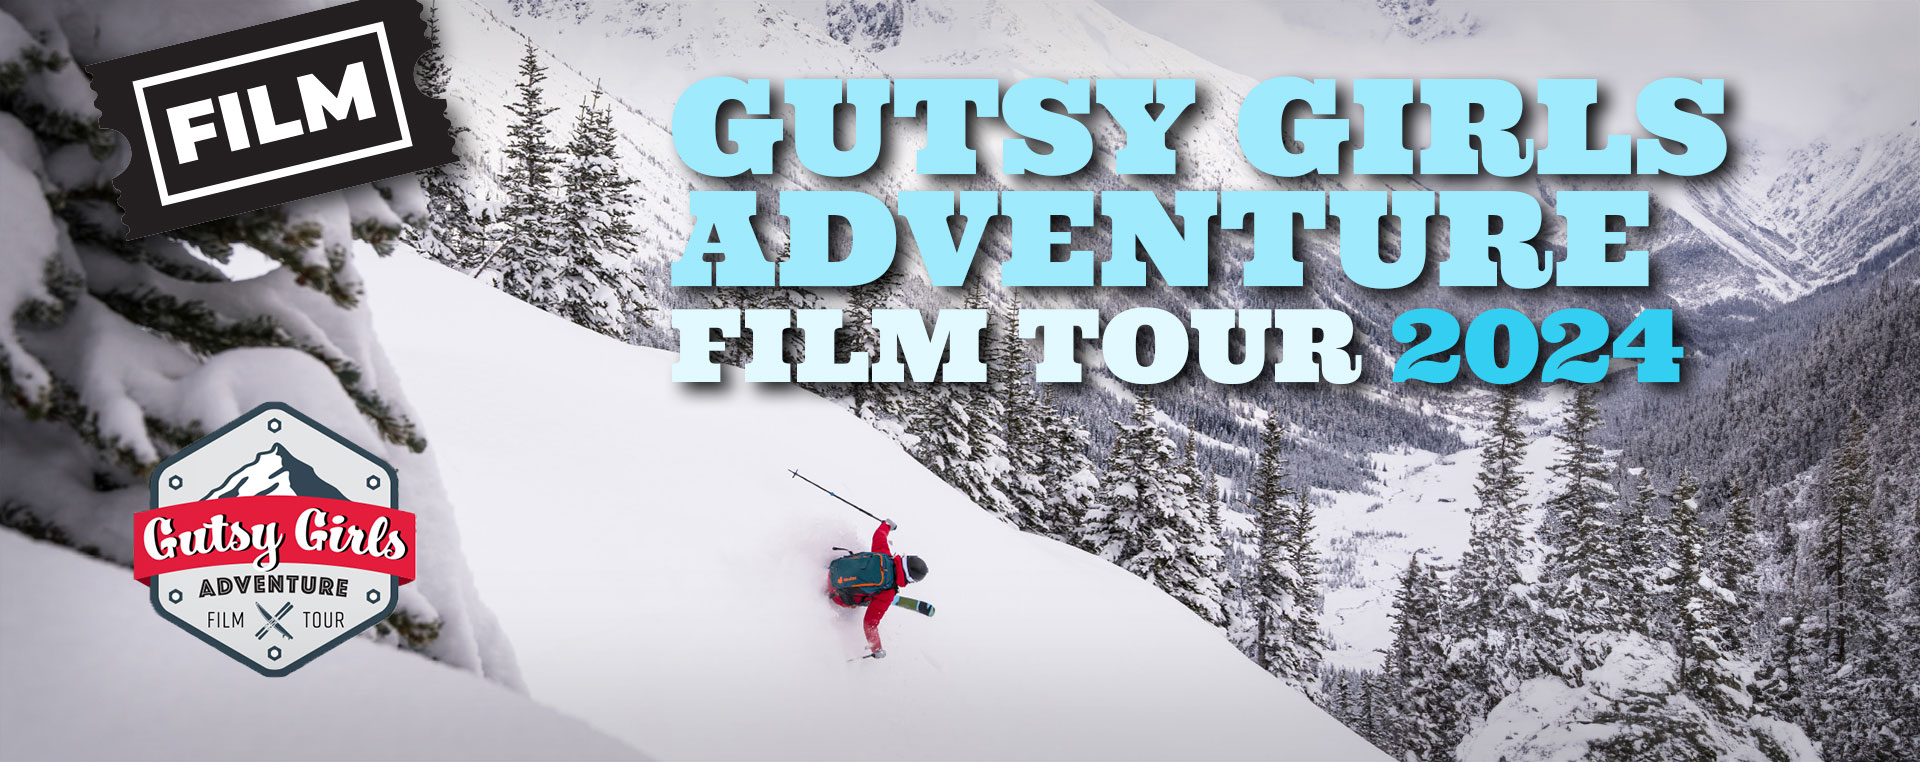 Gutsy Girls Adventure Film Tour 2024 3 Aug NSW